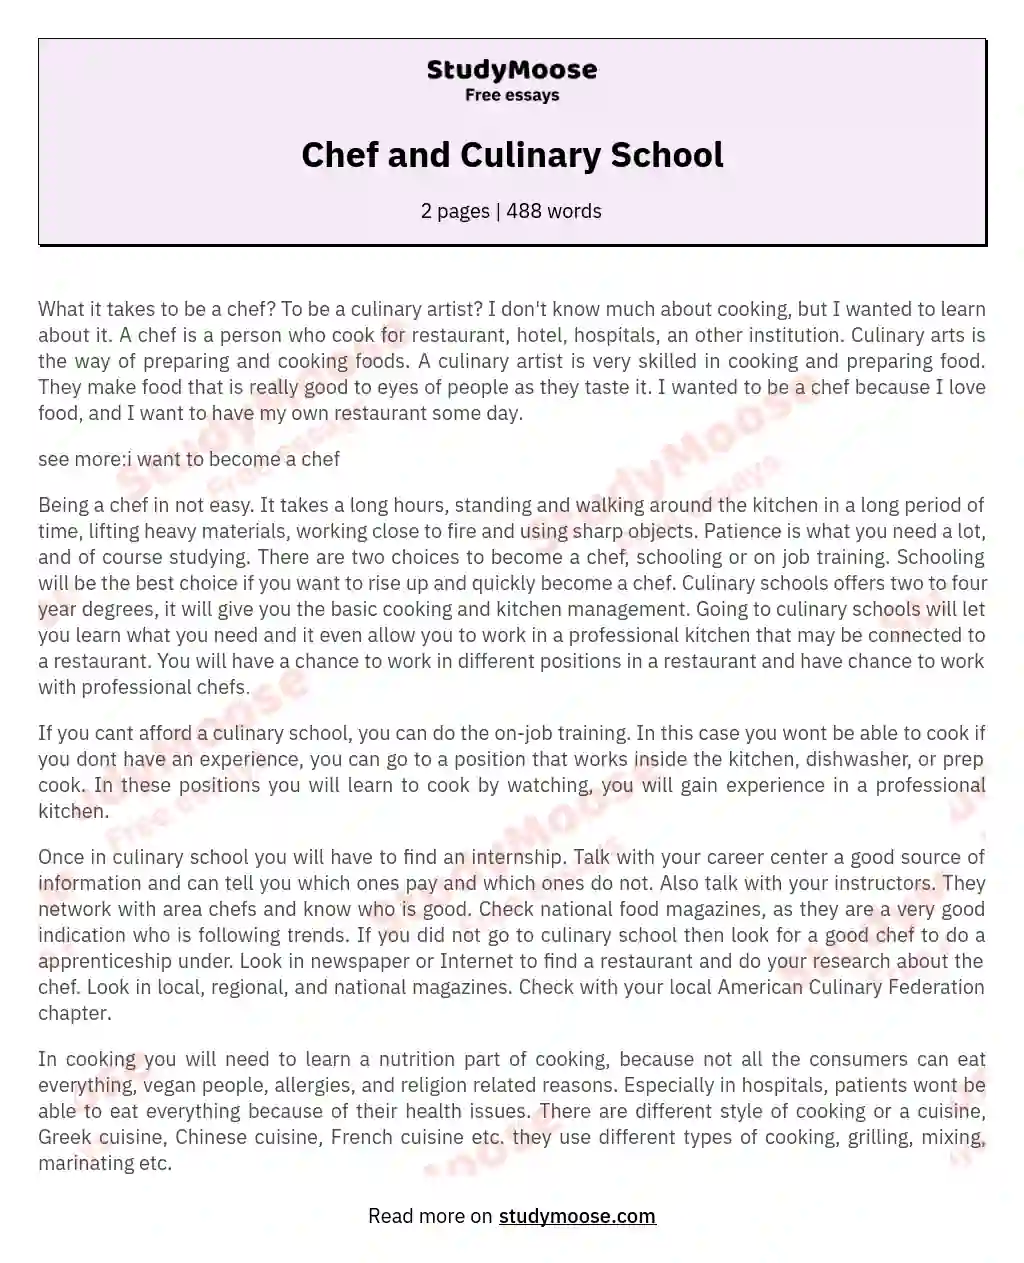 Chef and Culinary School essay